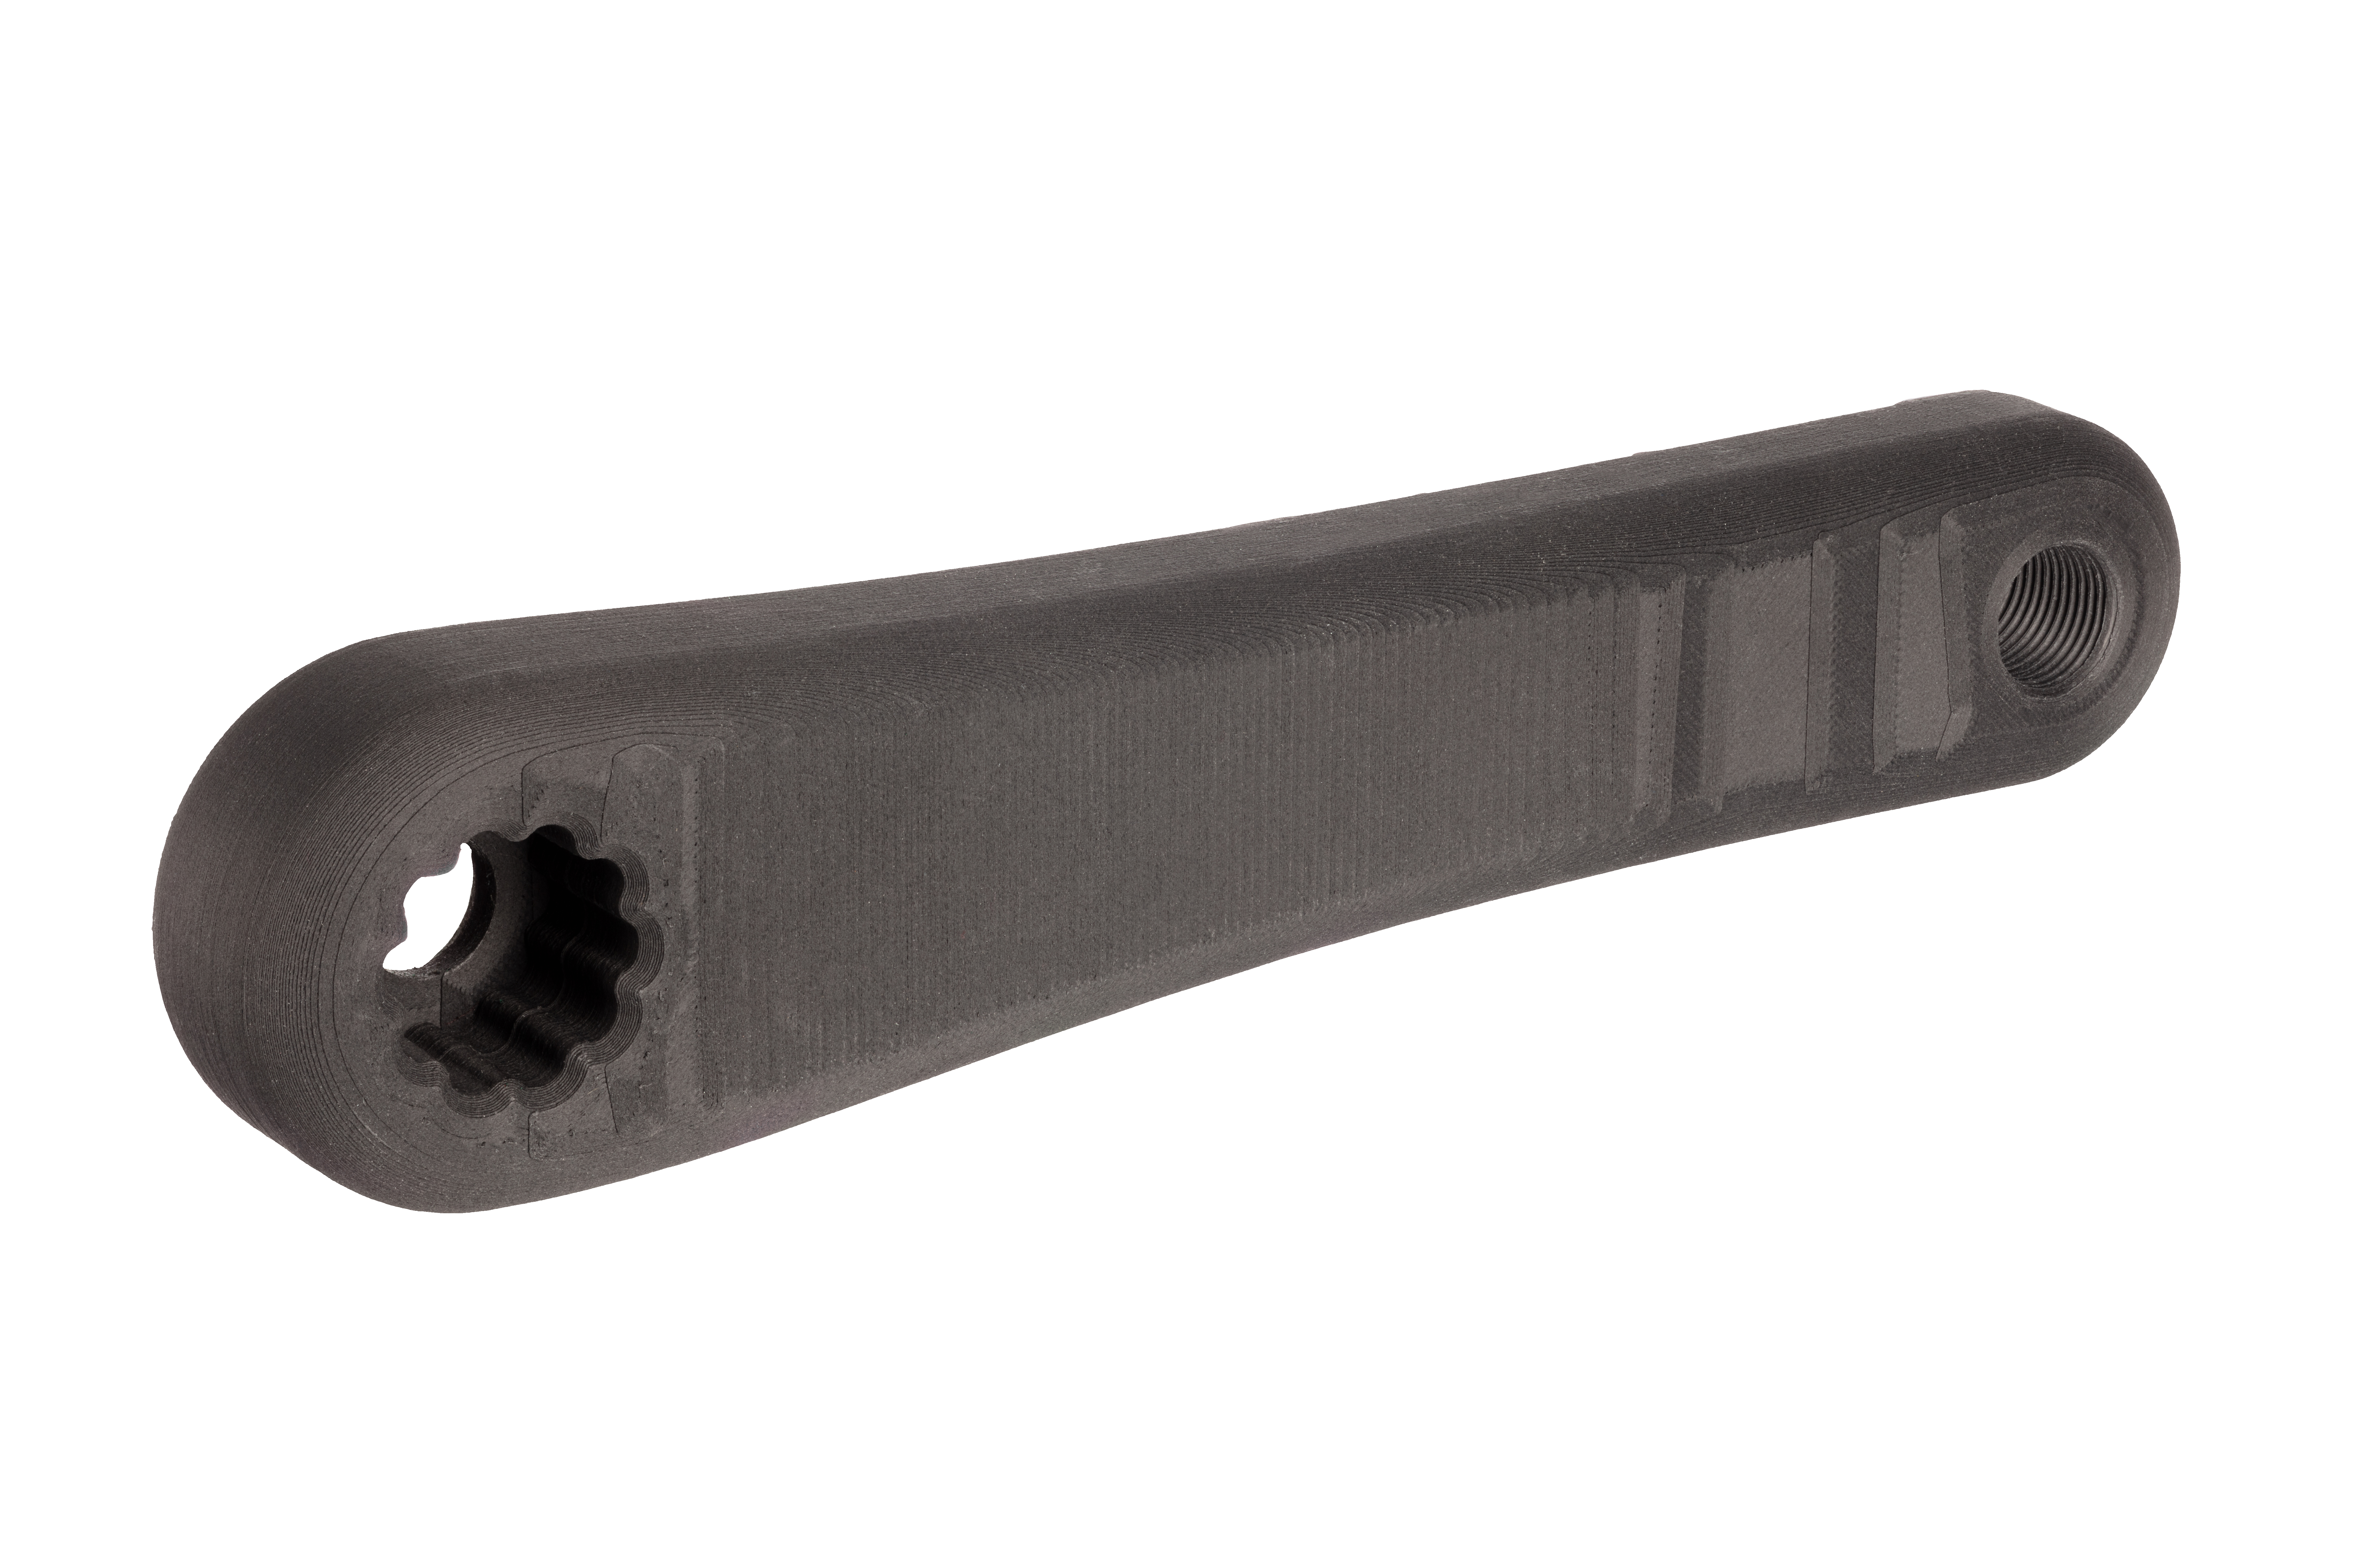 Pedal crank manufactured using the Fiber 3D printer. Photo via Desktop Metal.